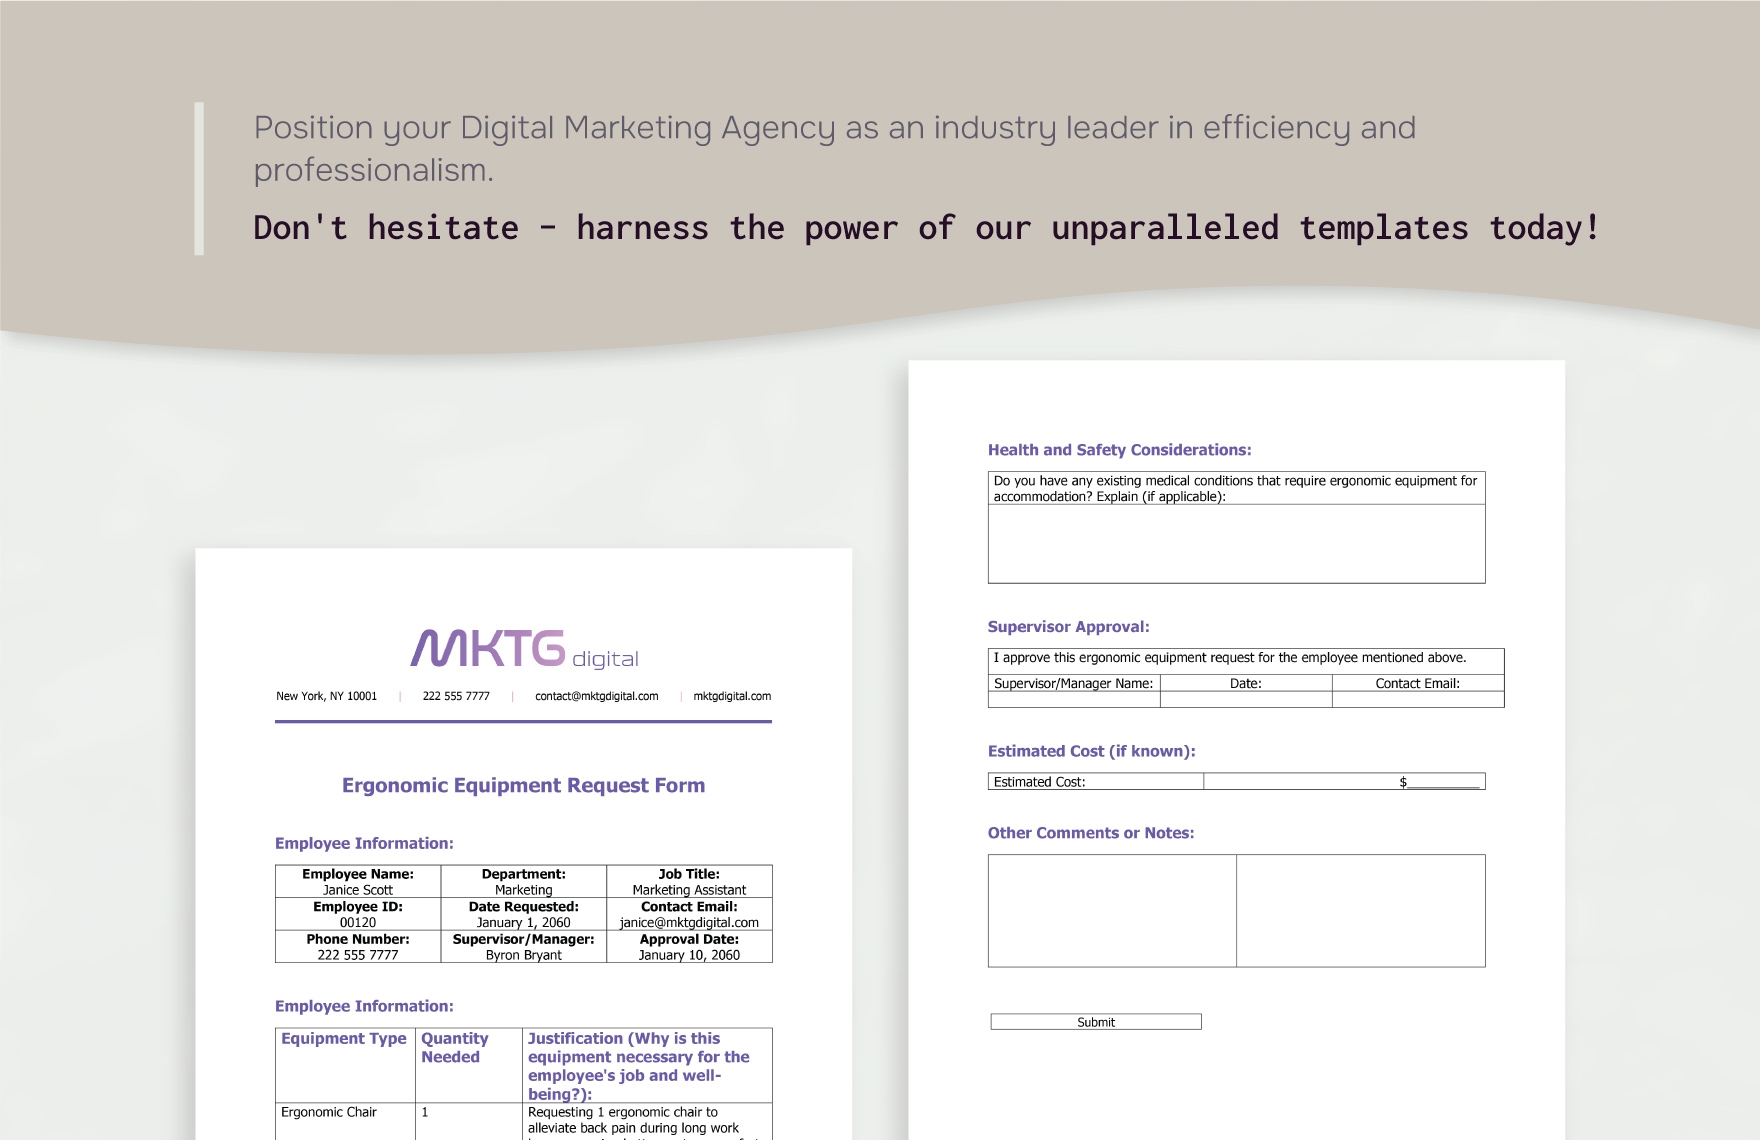 Digital Marketing Agency Ergonomic Equipment Request Form Template